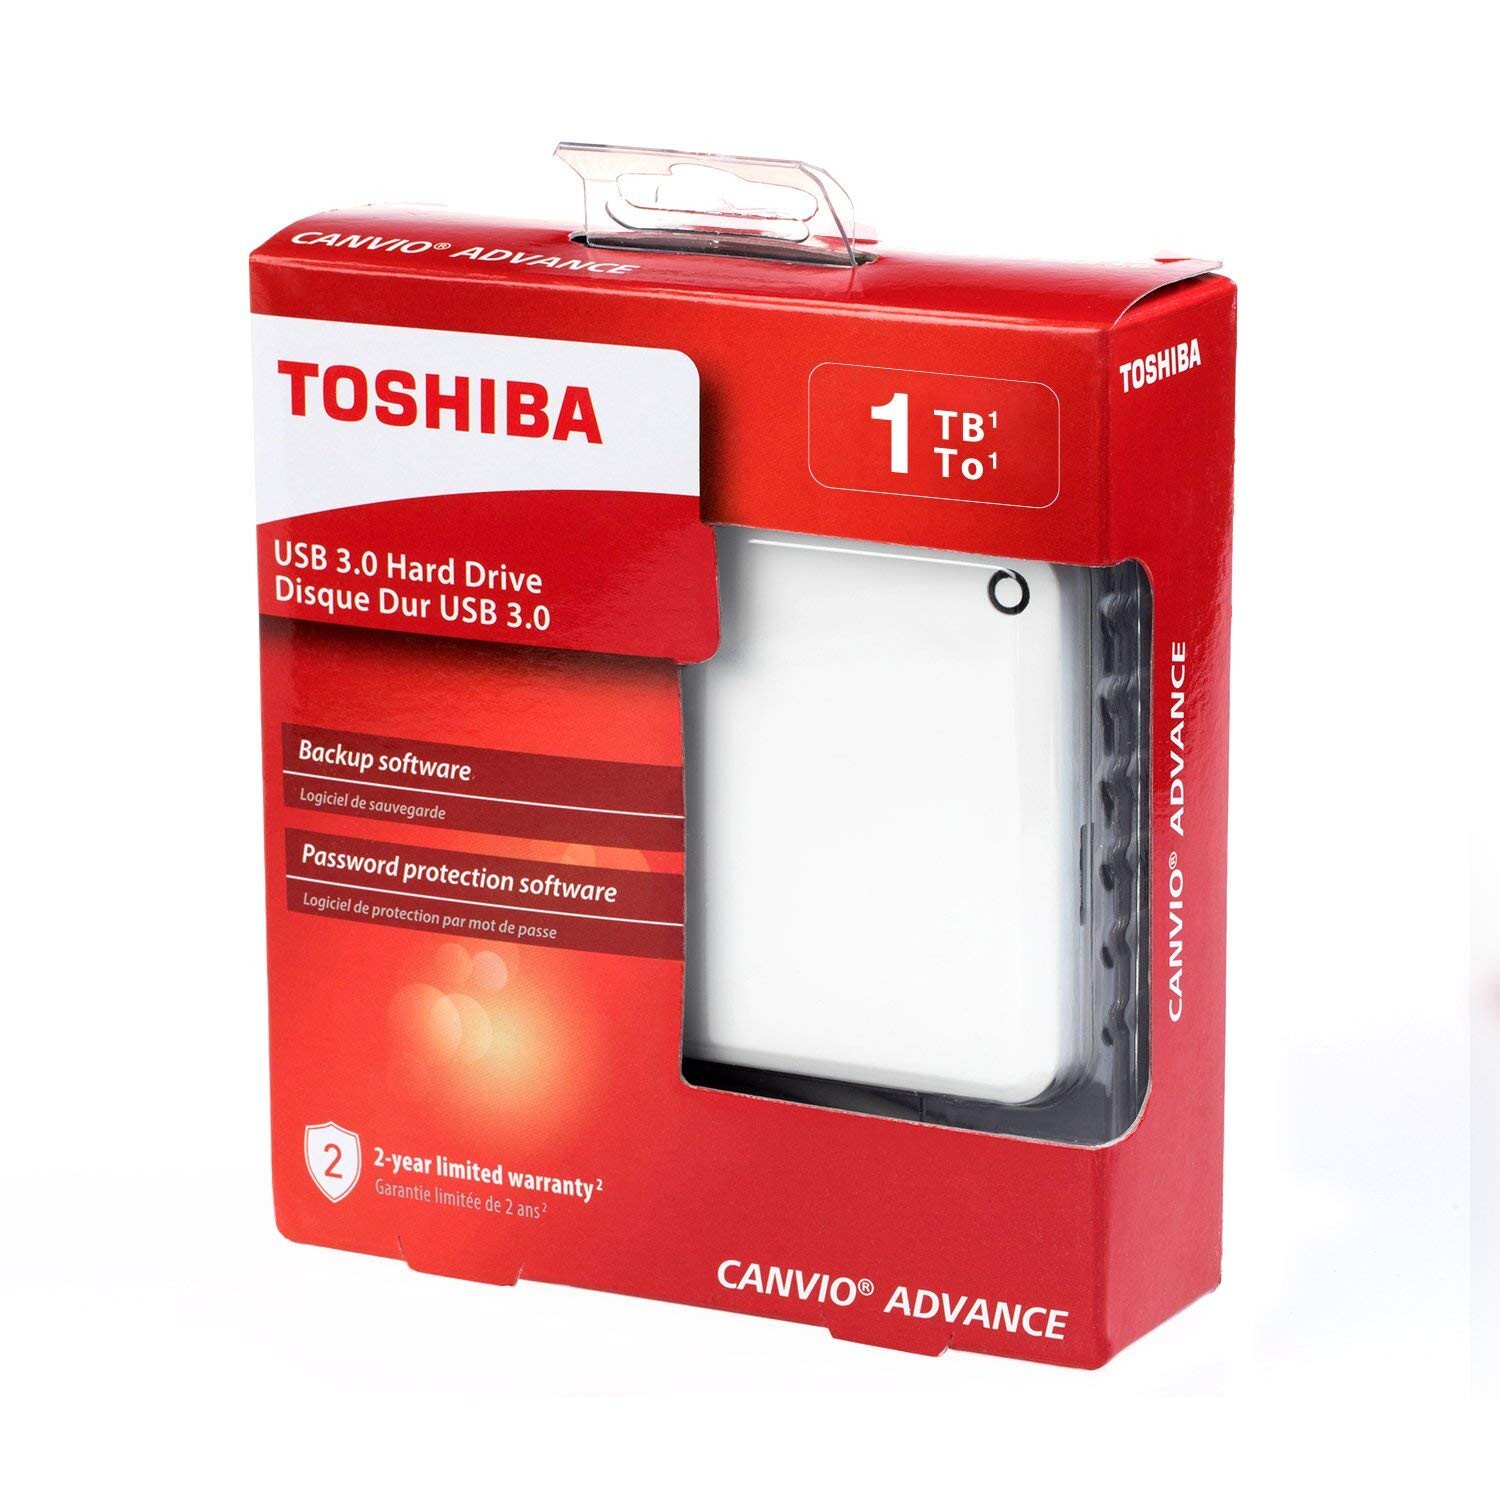 Toshiba Canvio Advance Portable External Hard Drive USB 3.0